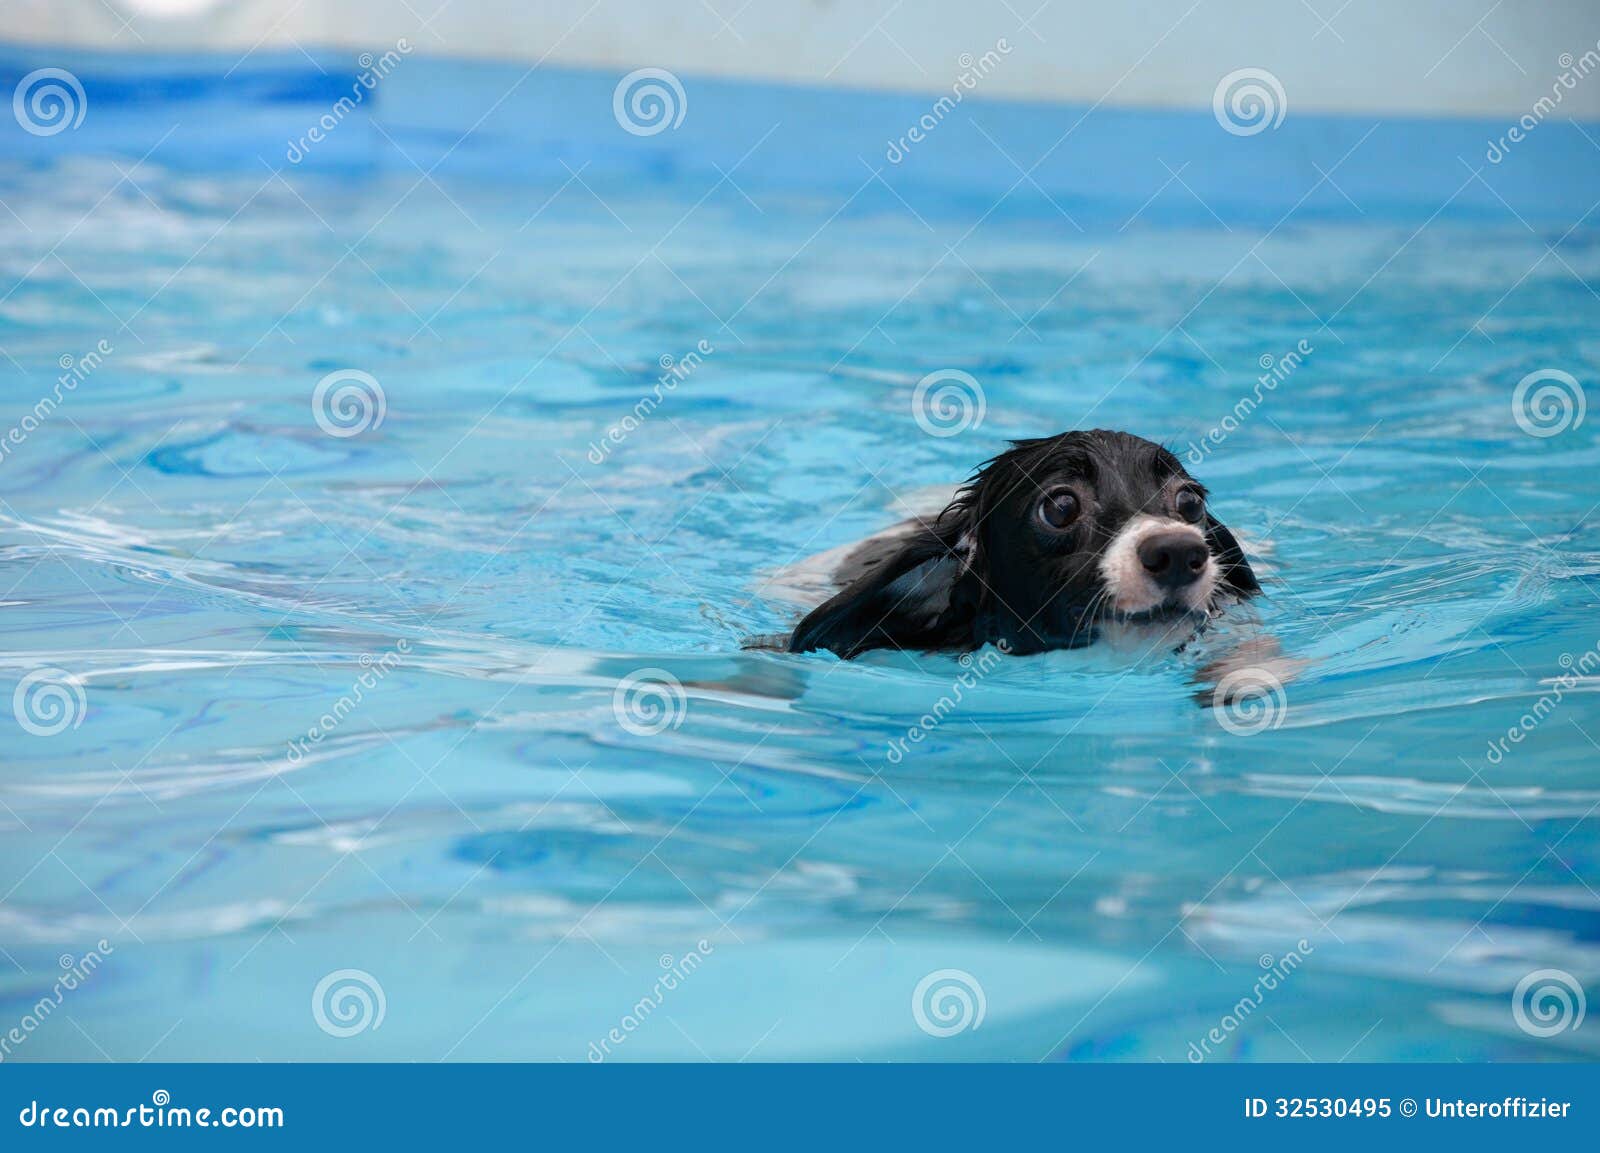 clipart dog swimming - photo #22